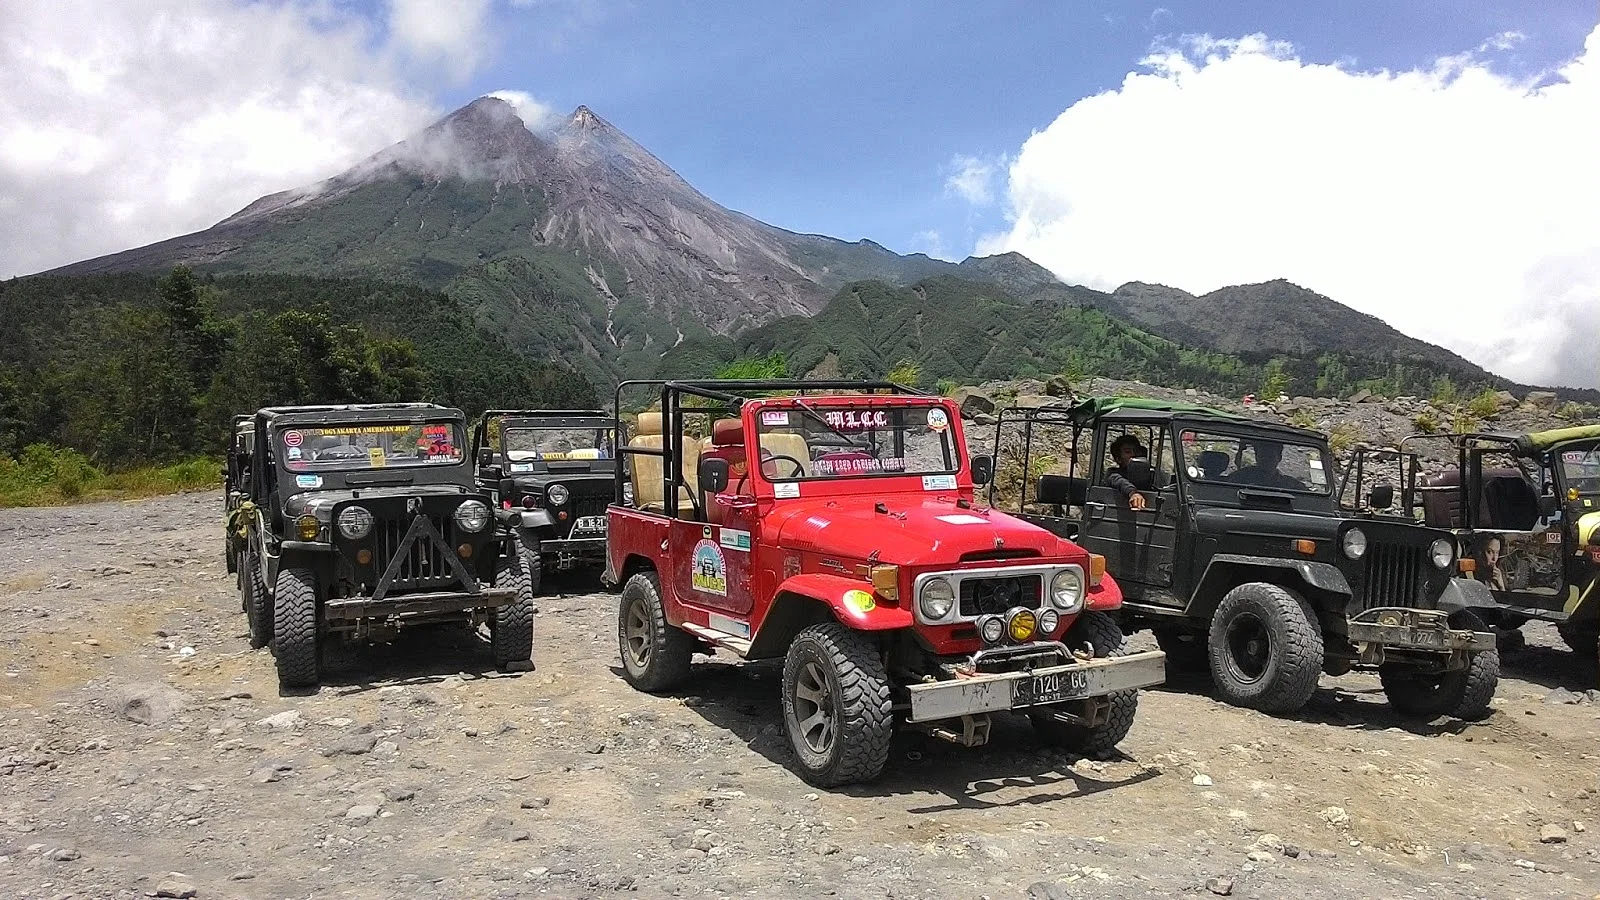 Mount Merapi 4x4 tour near Yogyakarta, Indonesia.